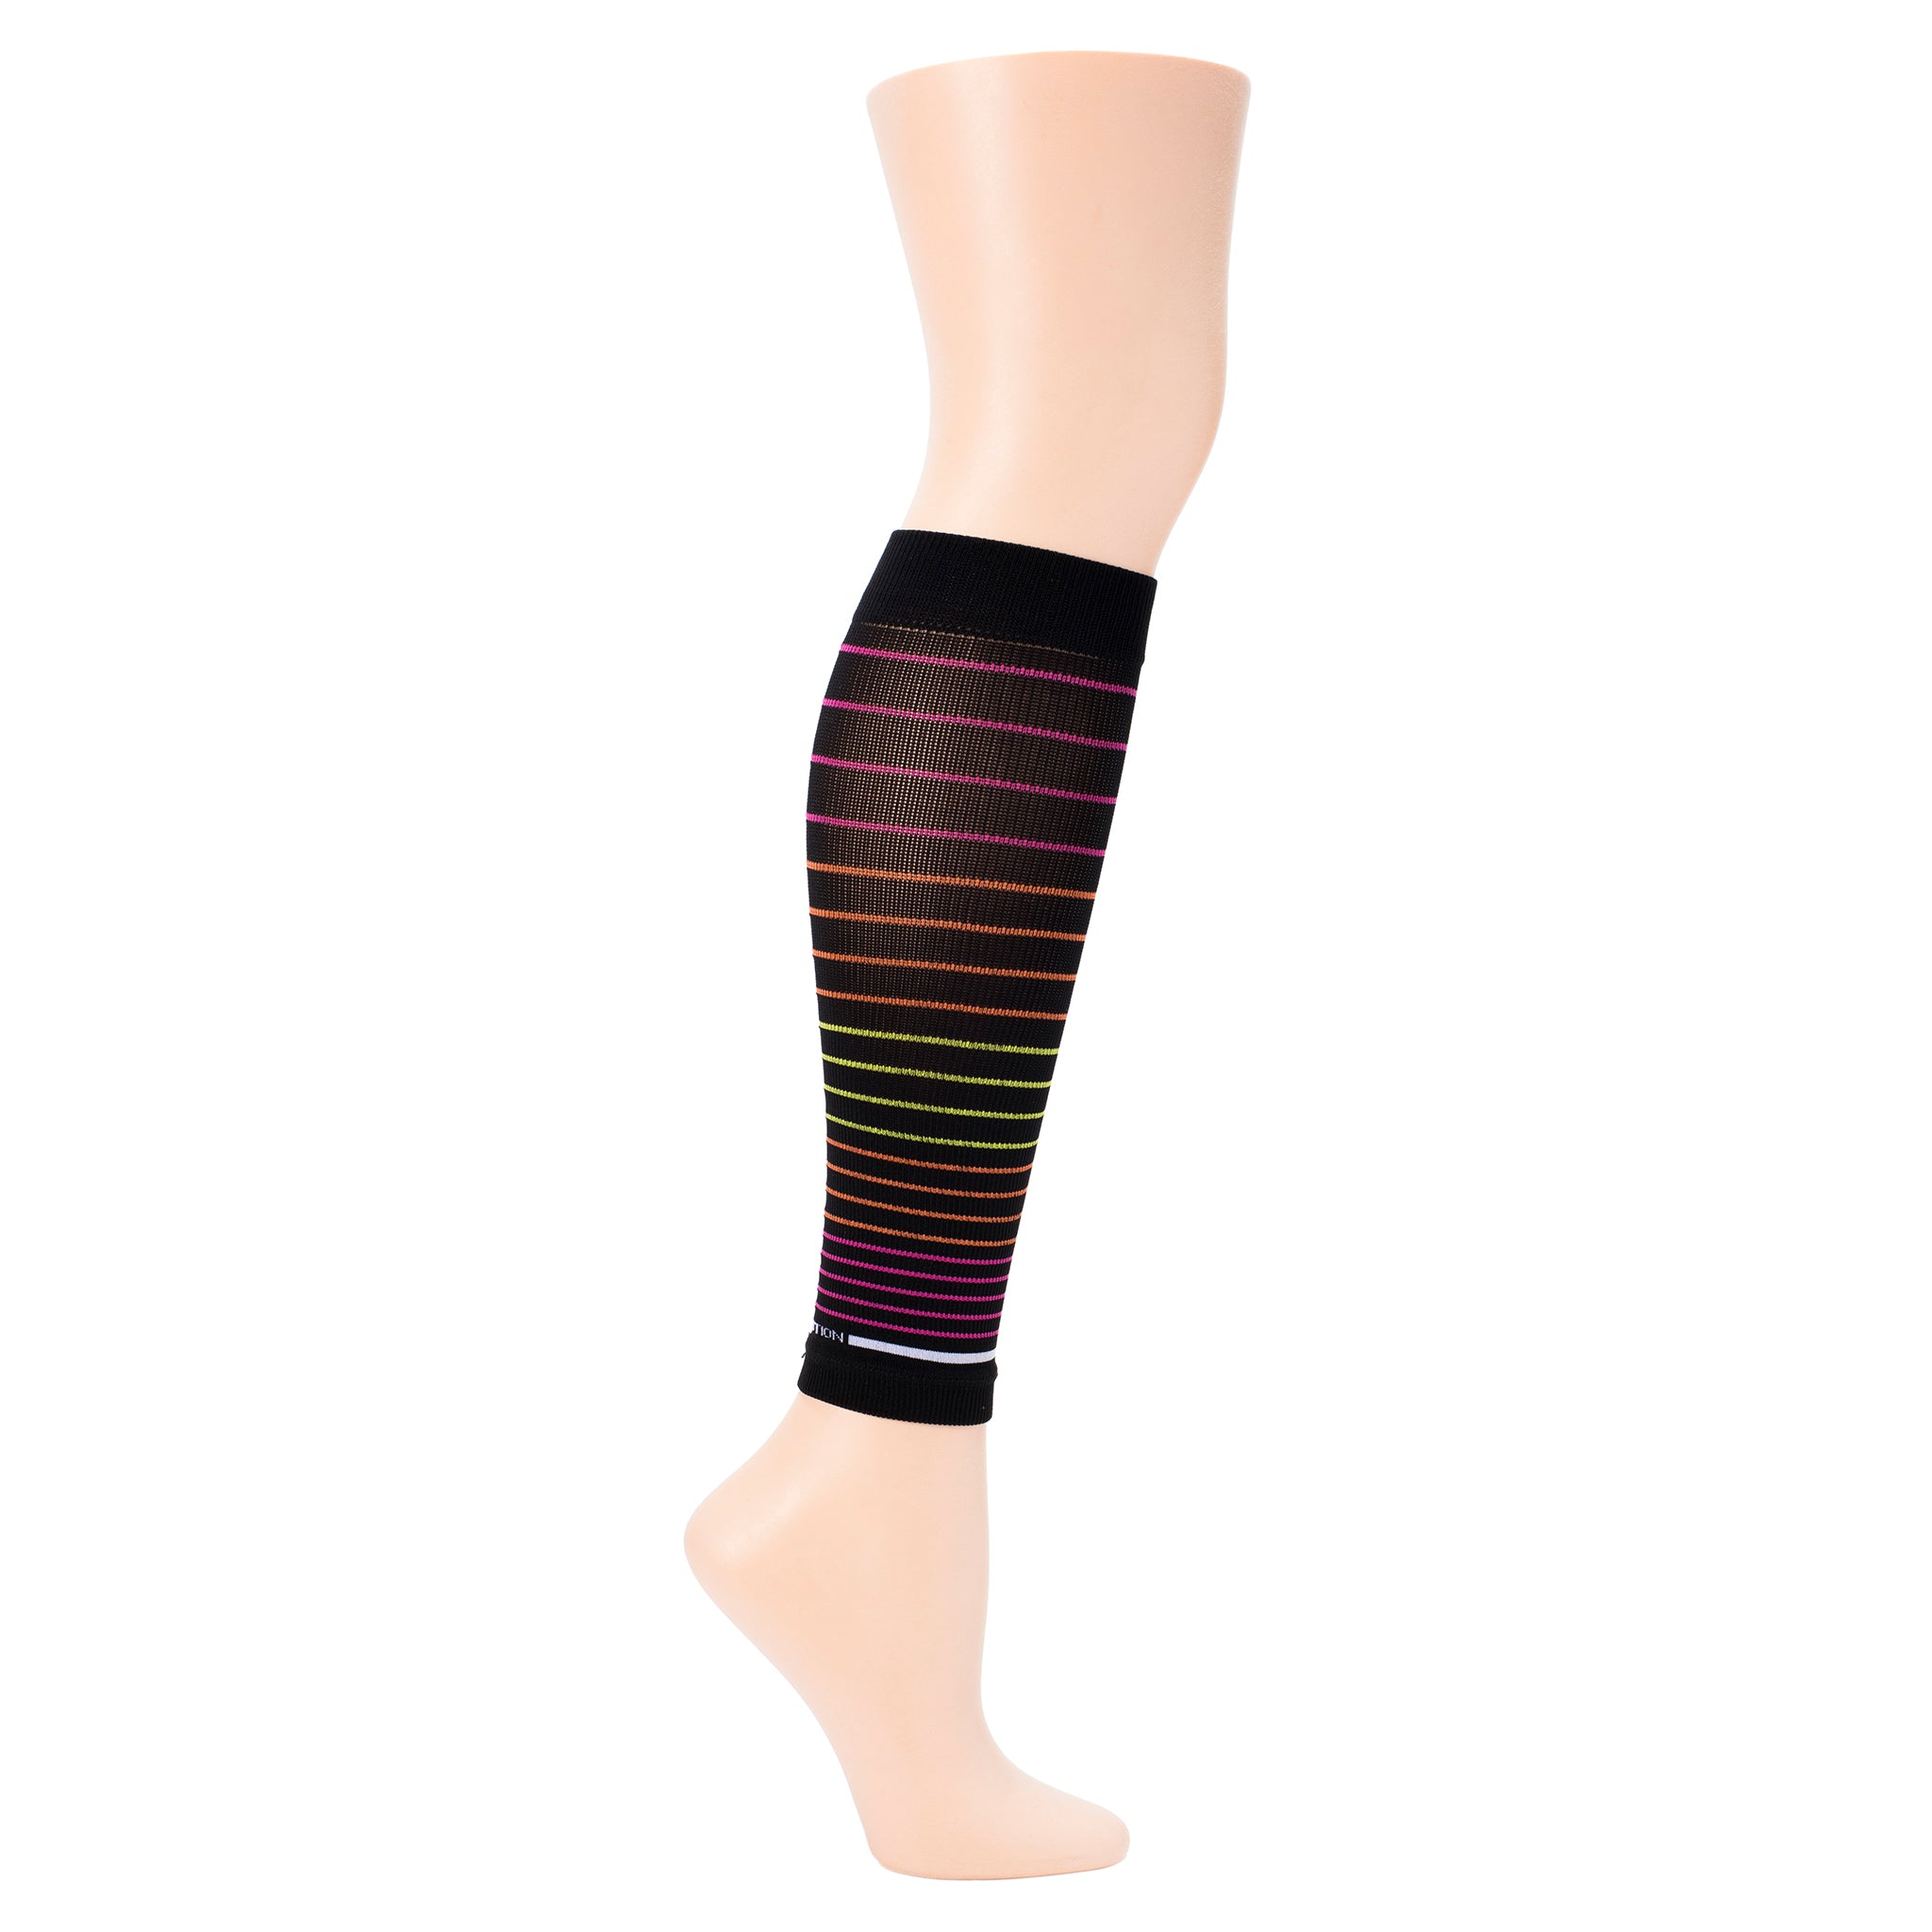 Calf Compression Sleeves for Men & Women, 1 Pair, True 20-30mmHg Leg  Compression Socks Support for Running, Shin Splint, Calf Pain Relief,  Swelling, Varicose Veins, Nursing, Travel, Black S/M 